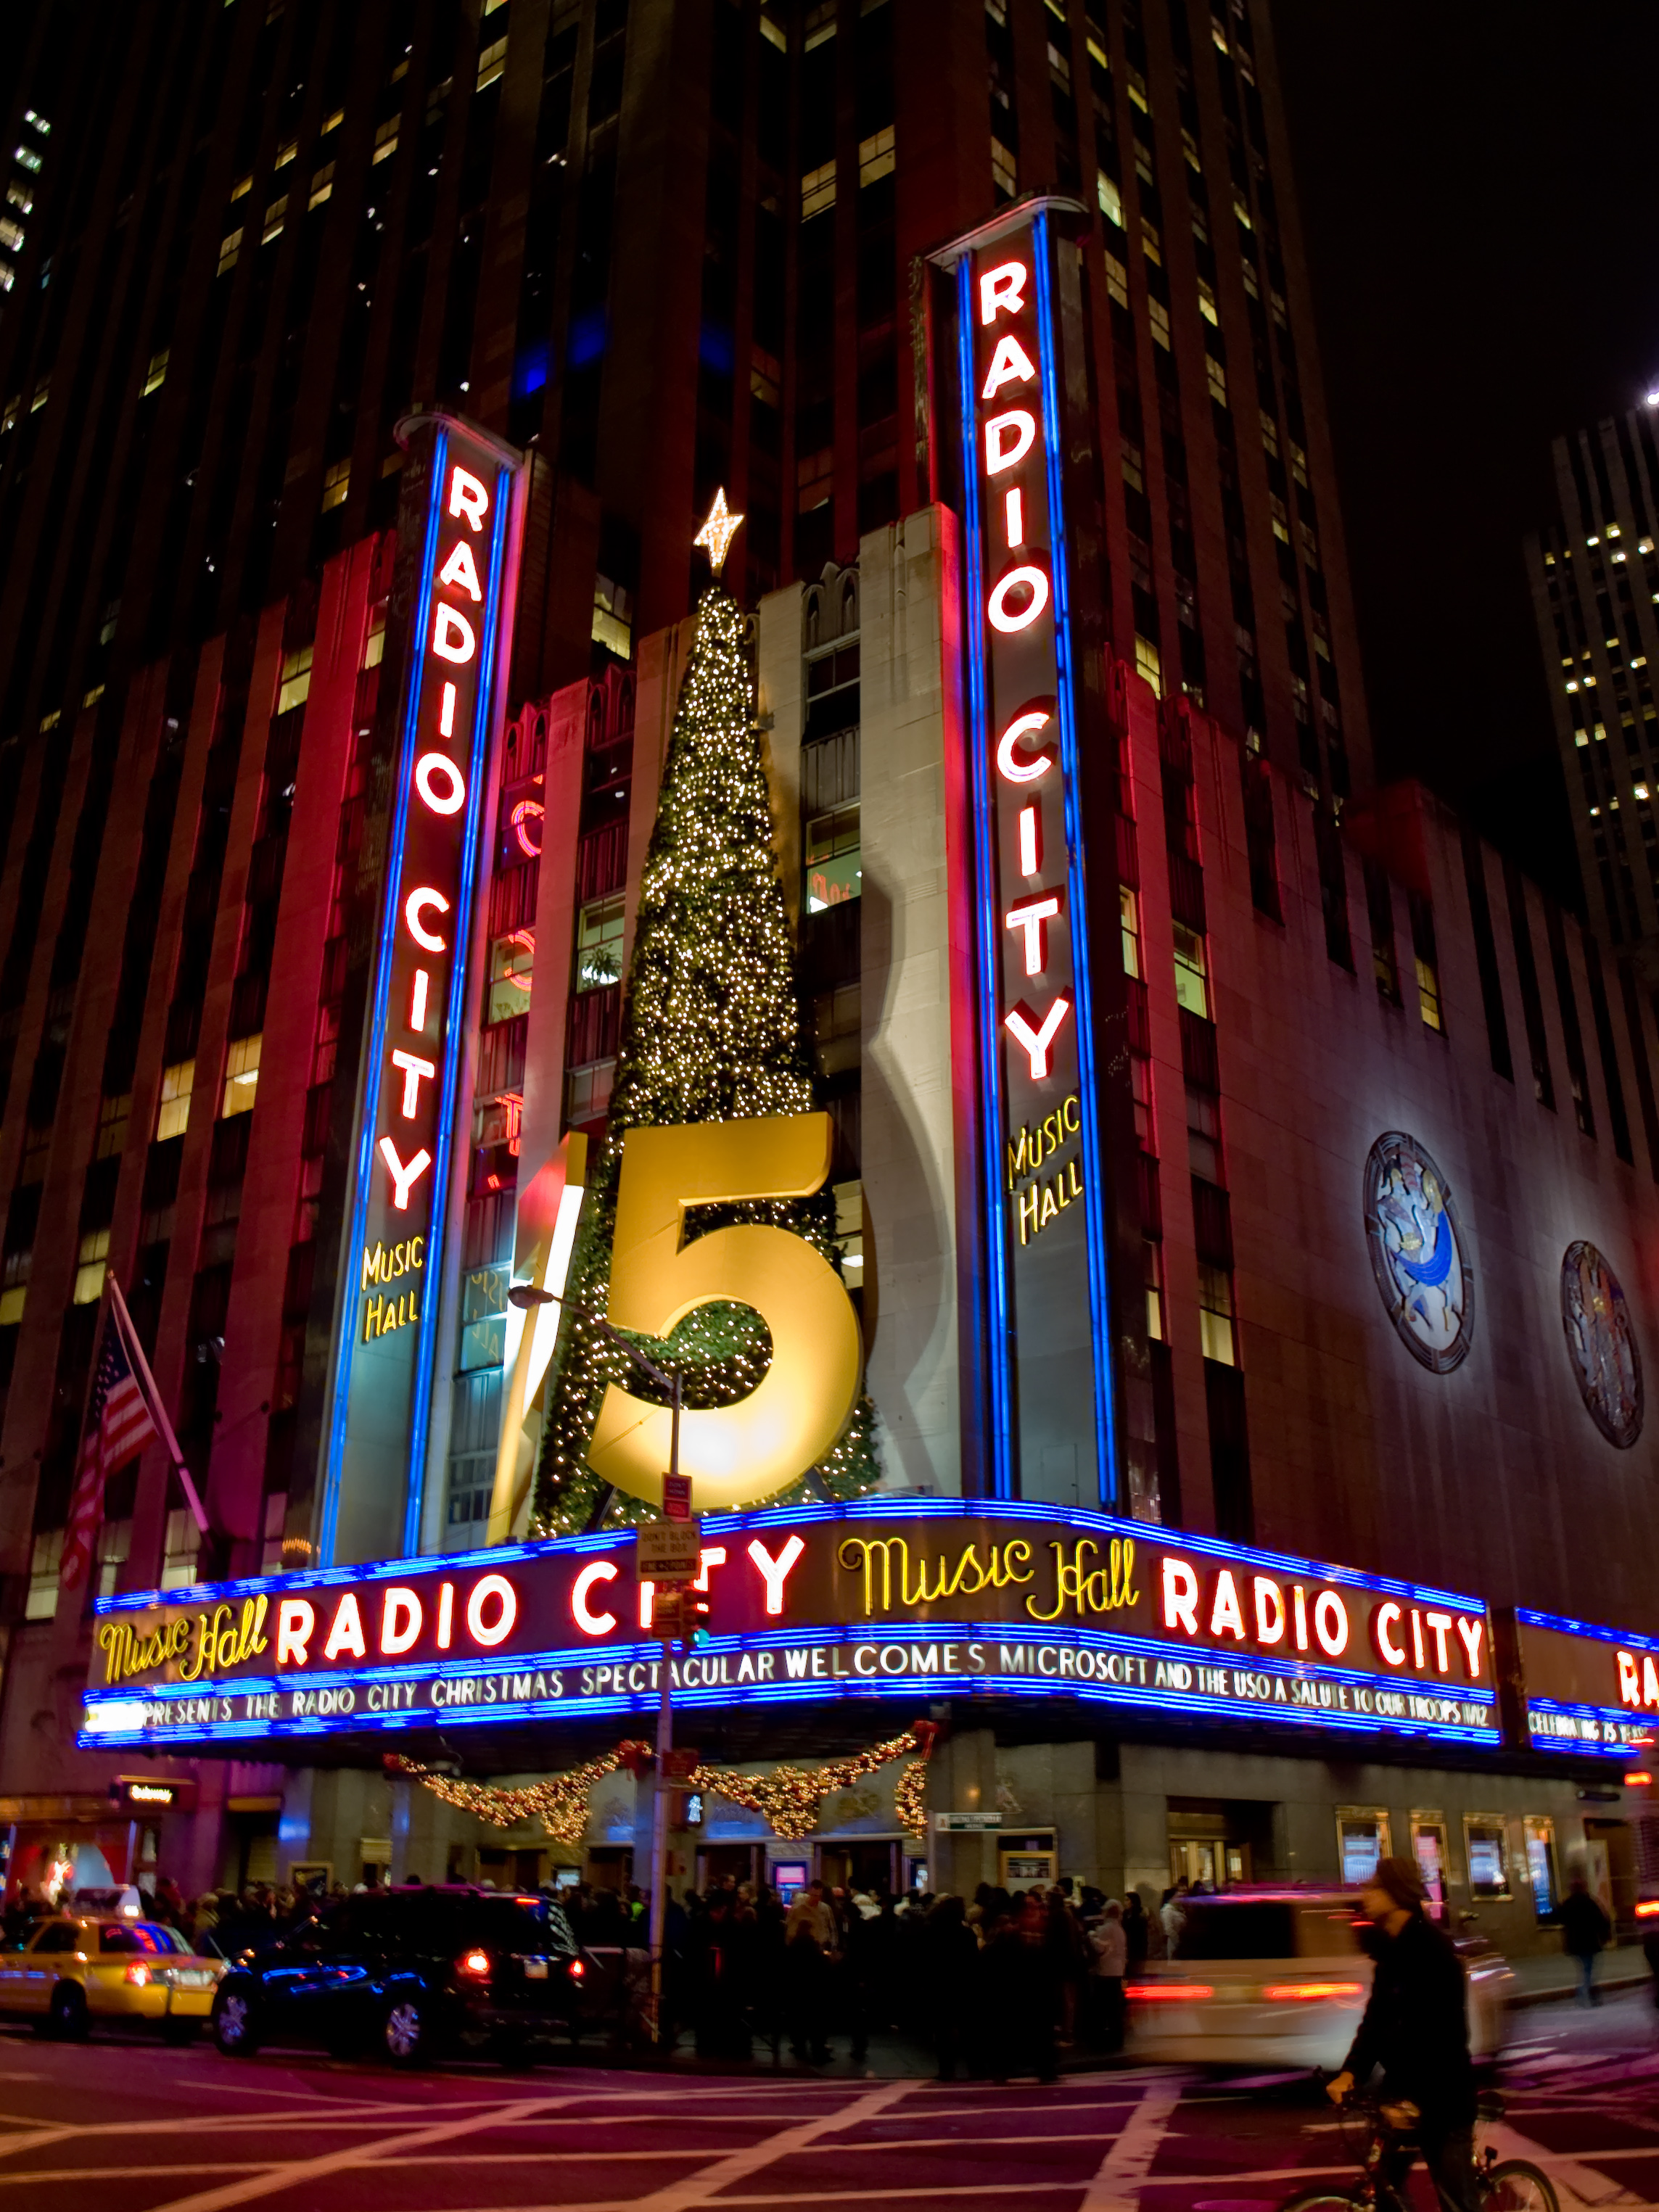 File:Radio City Music Hall 2229954271 675a3a4551.jpg - Wikimedia Commons